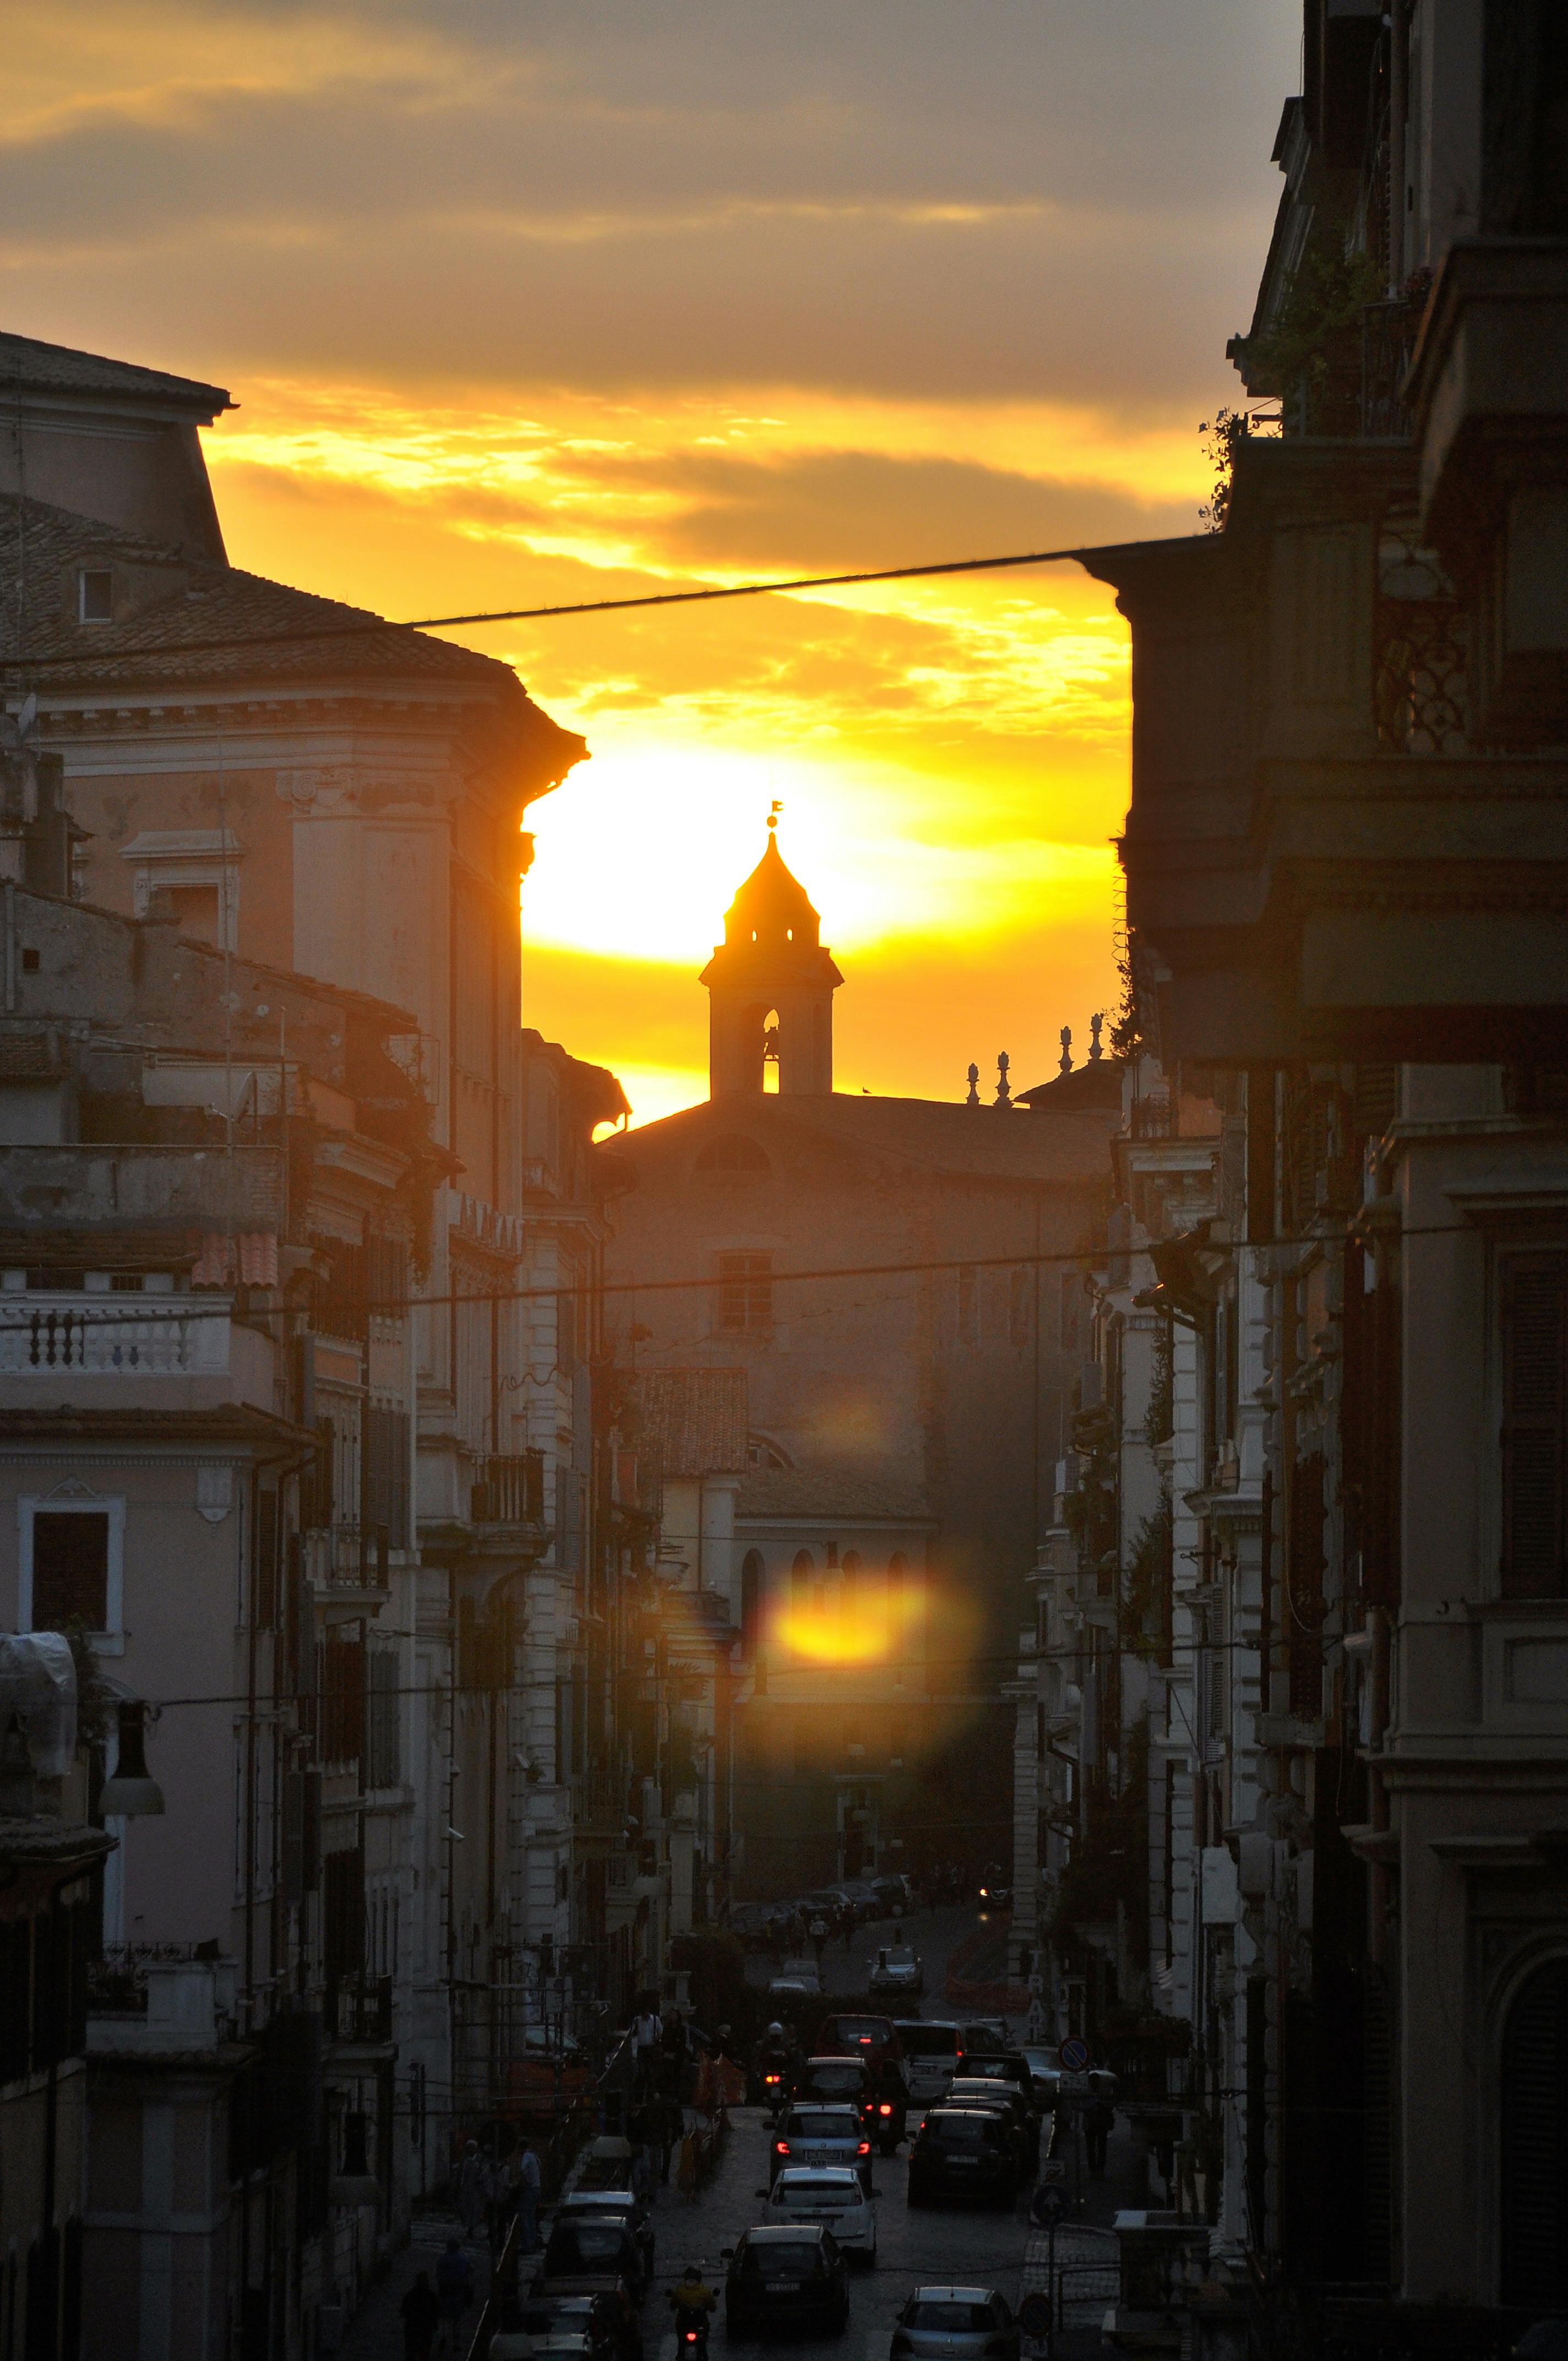 Free stock photo of church, golden sunset, street